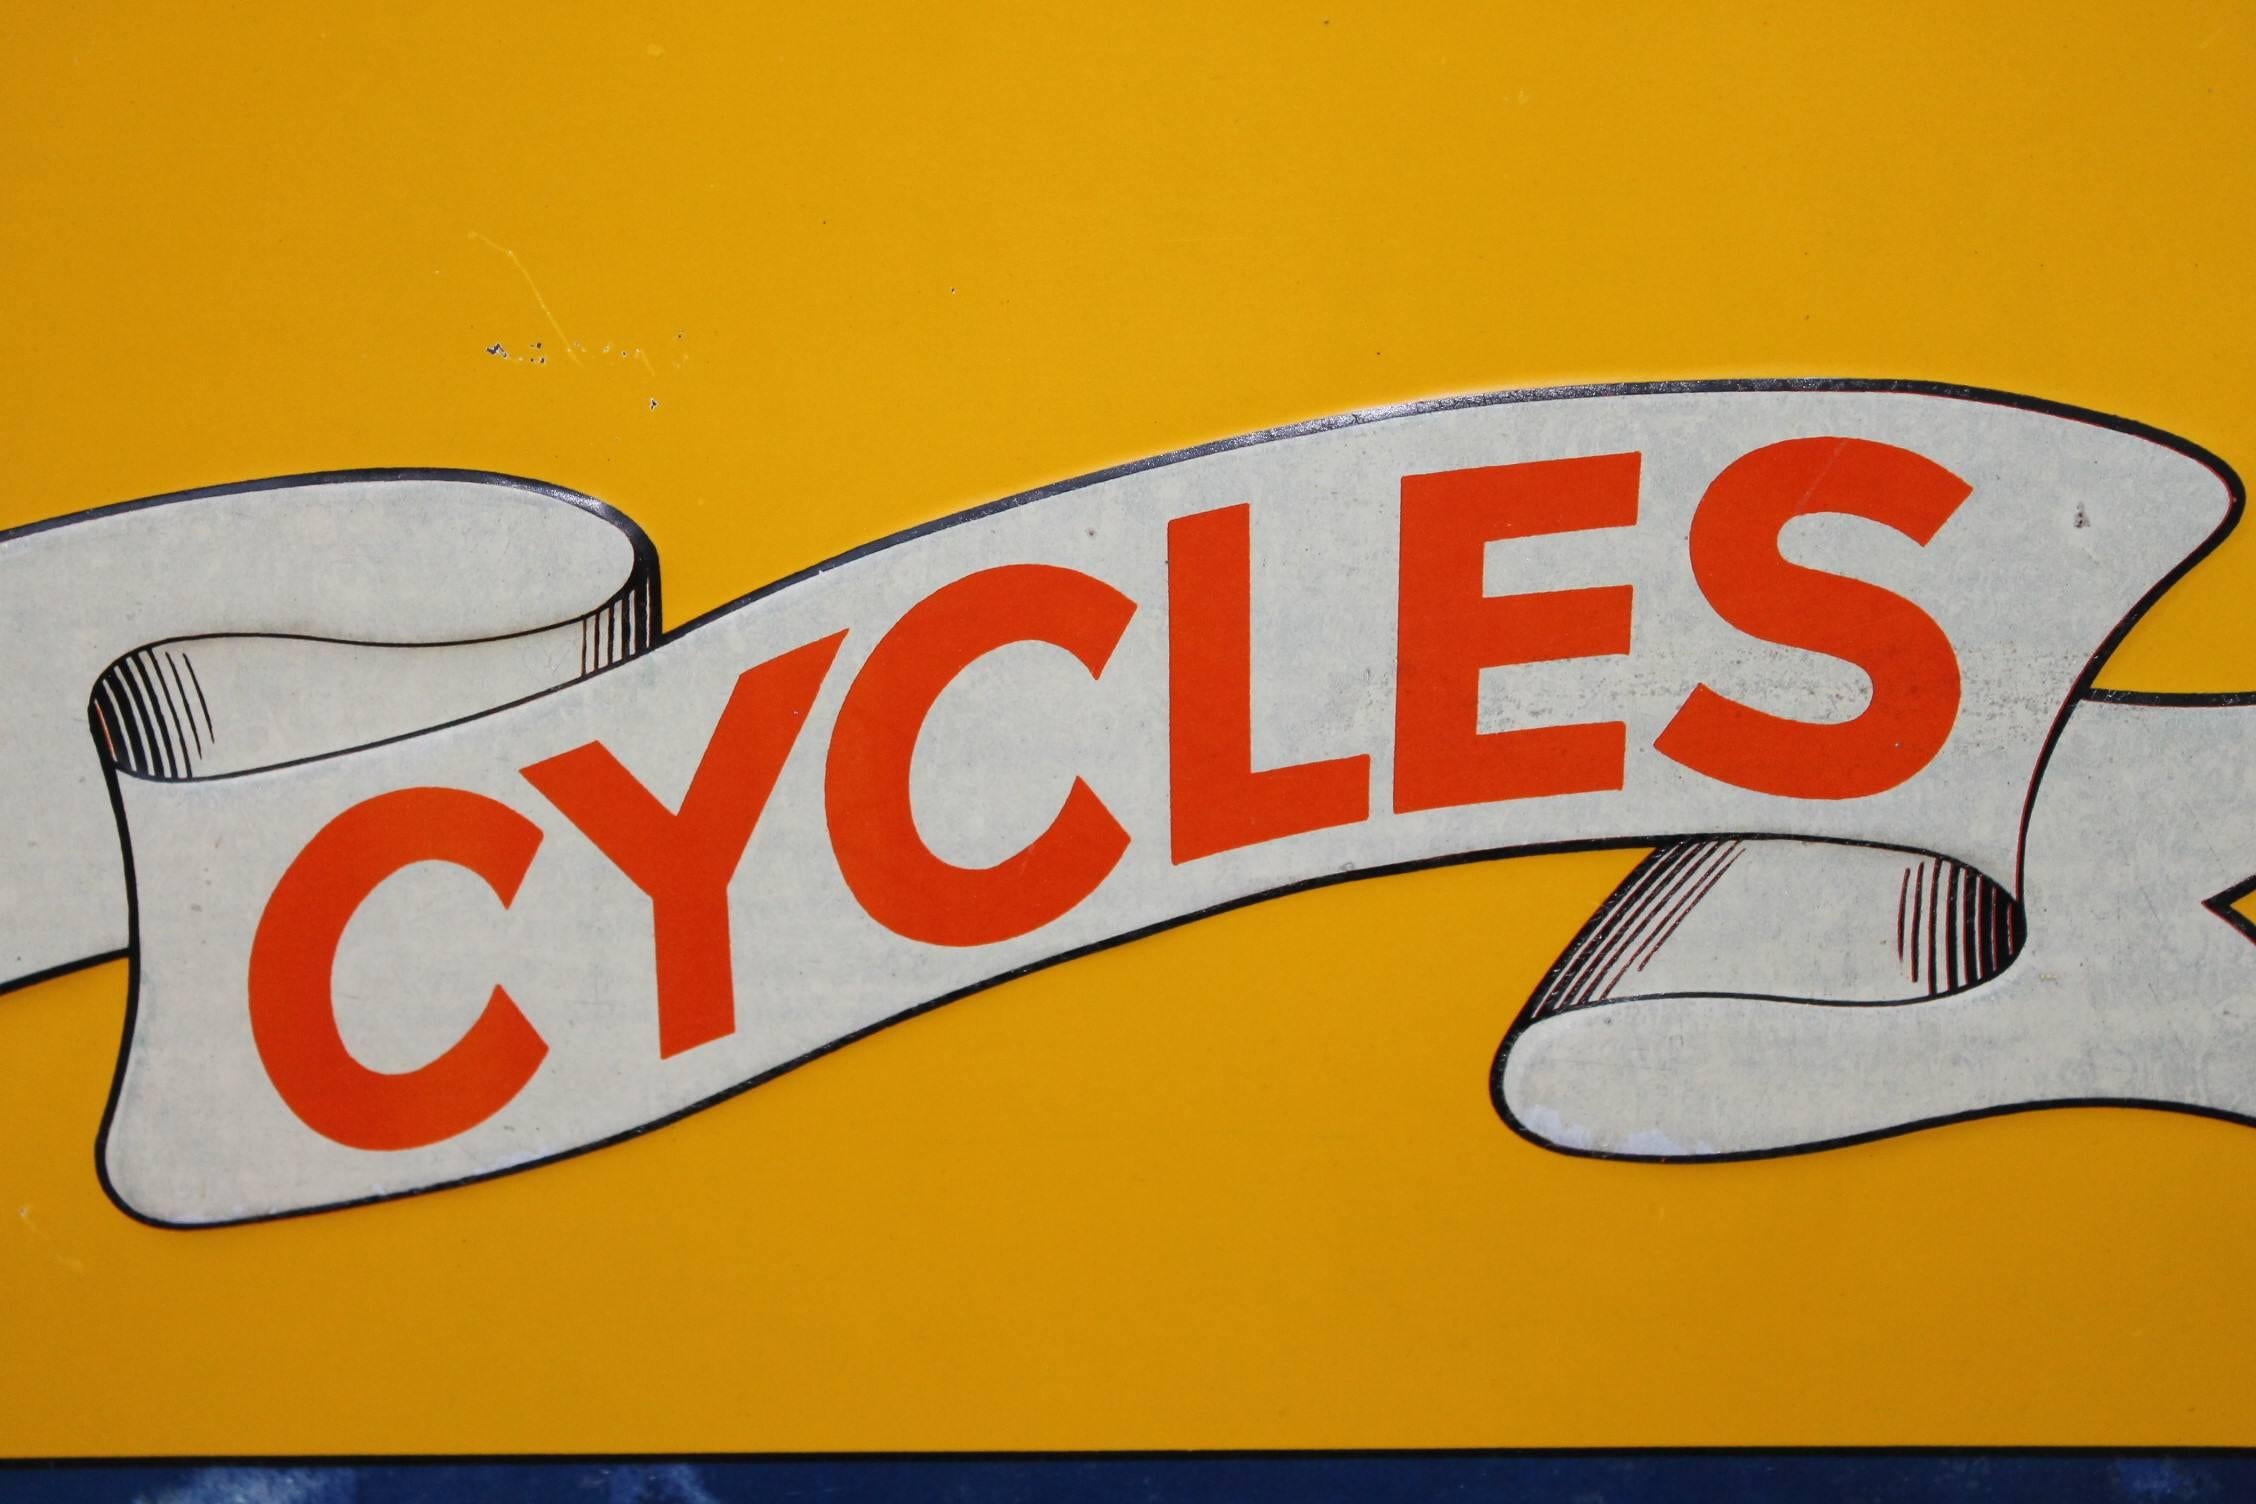 1948 Tin Publicity Sign for La Neva Cycles 2